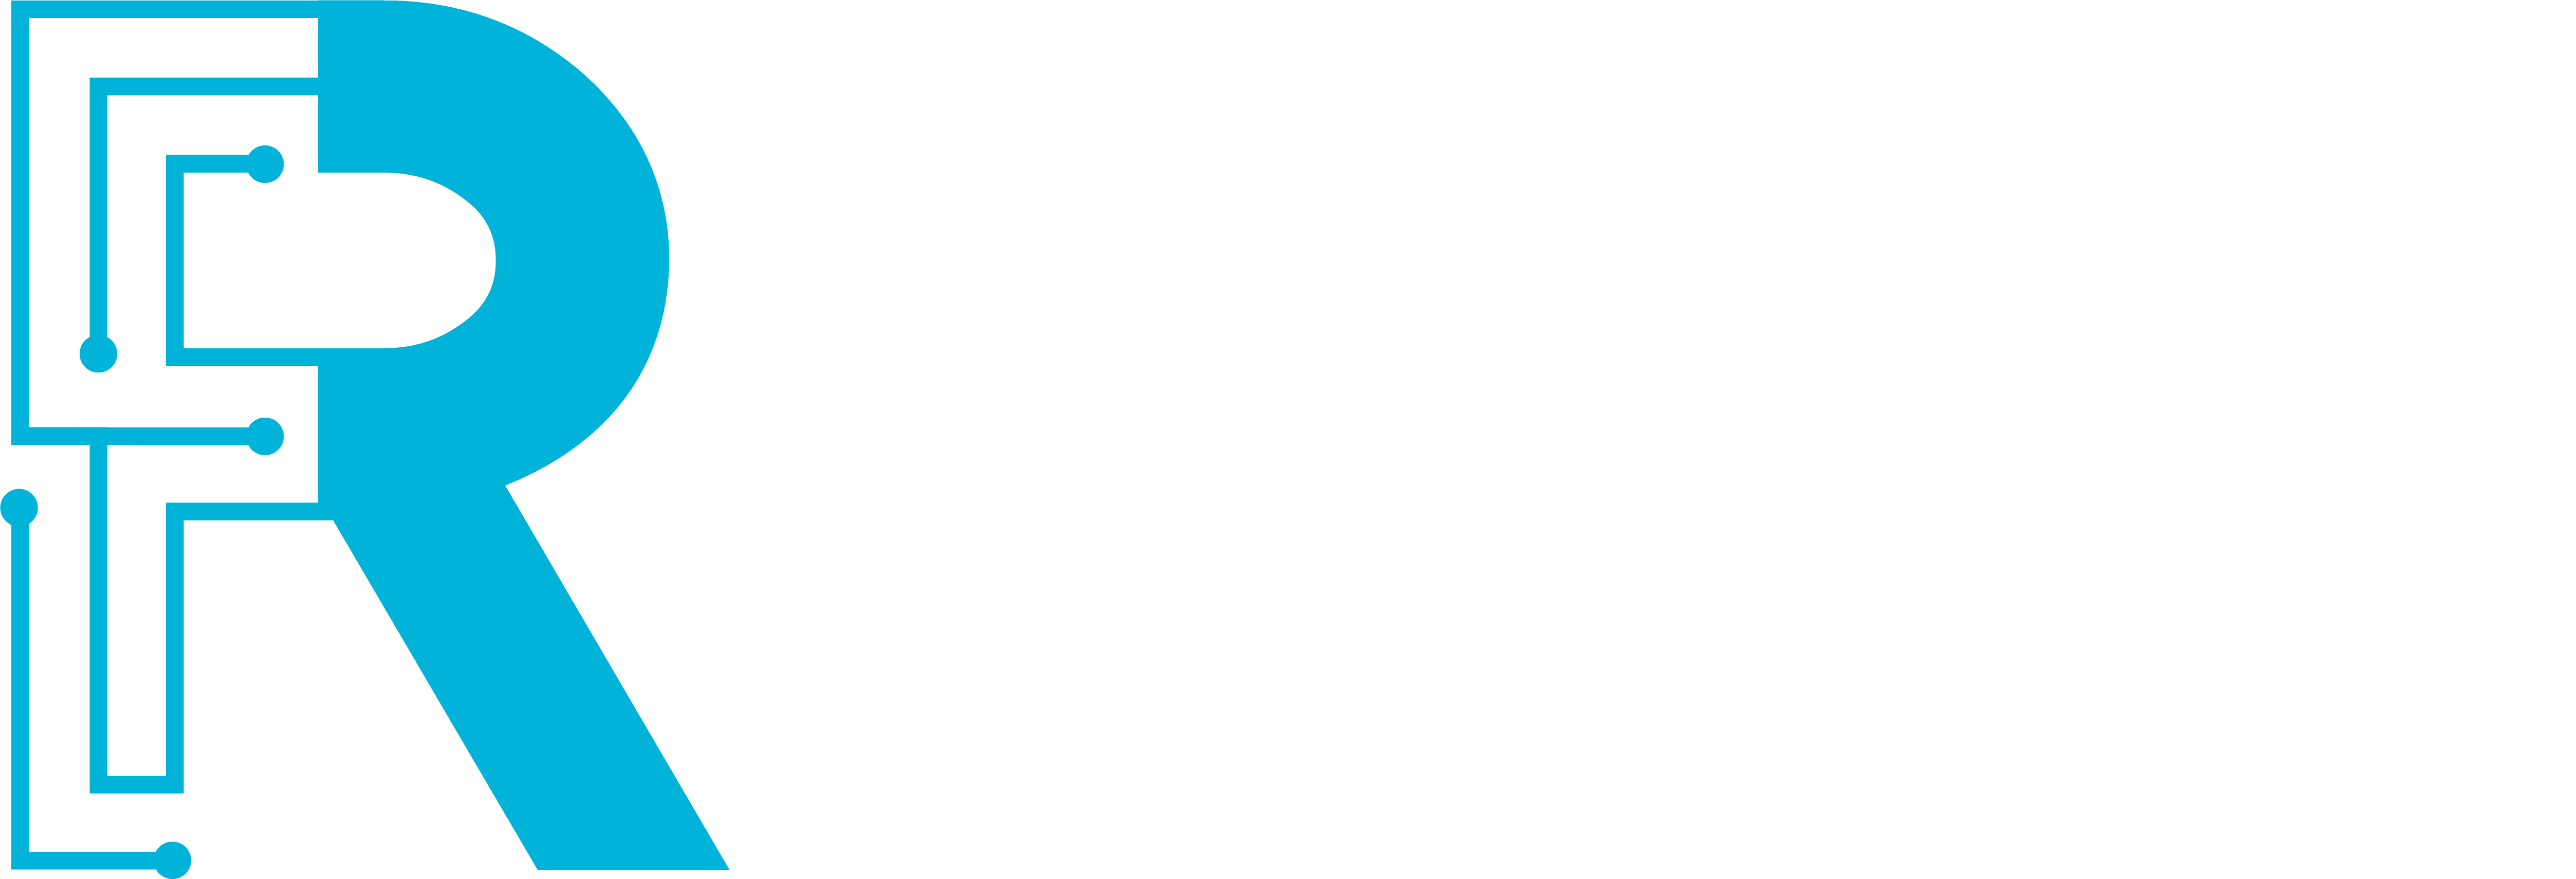 The Rutka Lab Logo